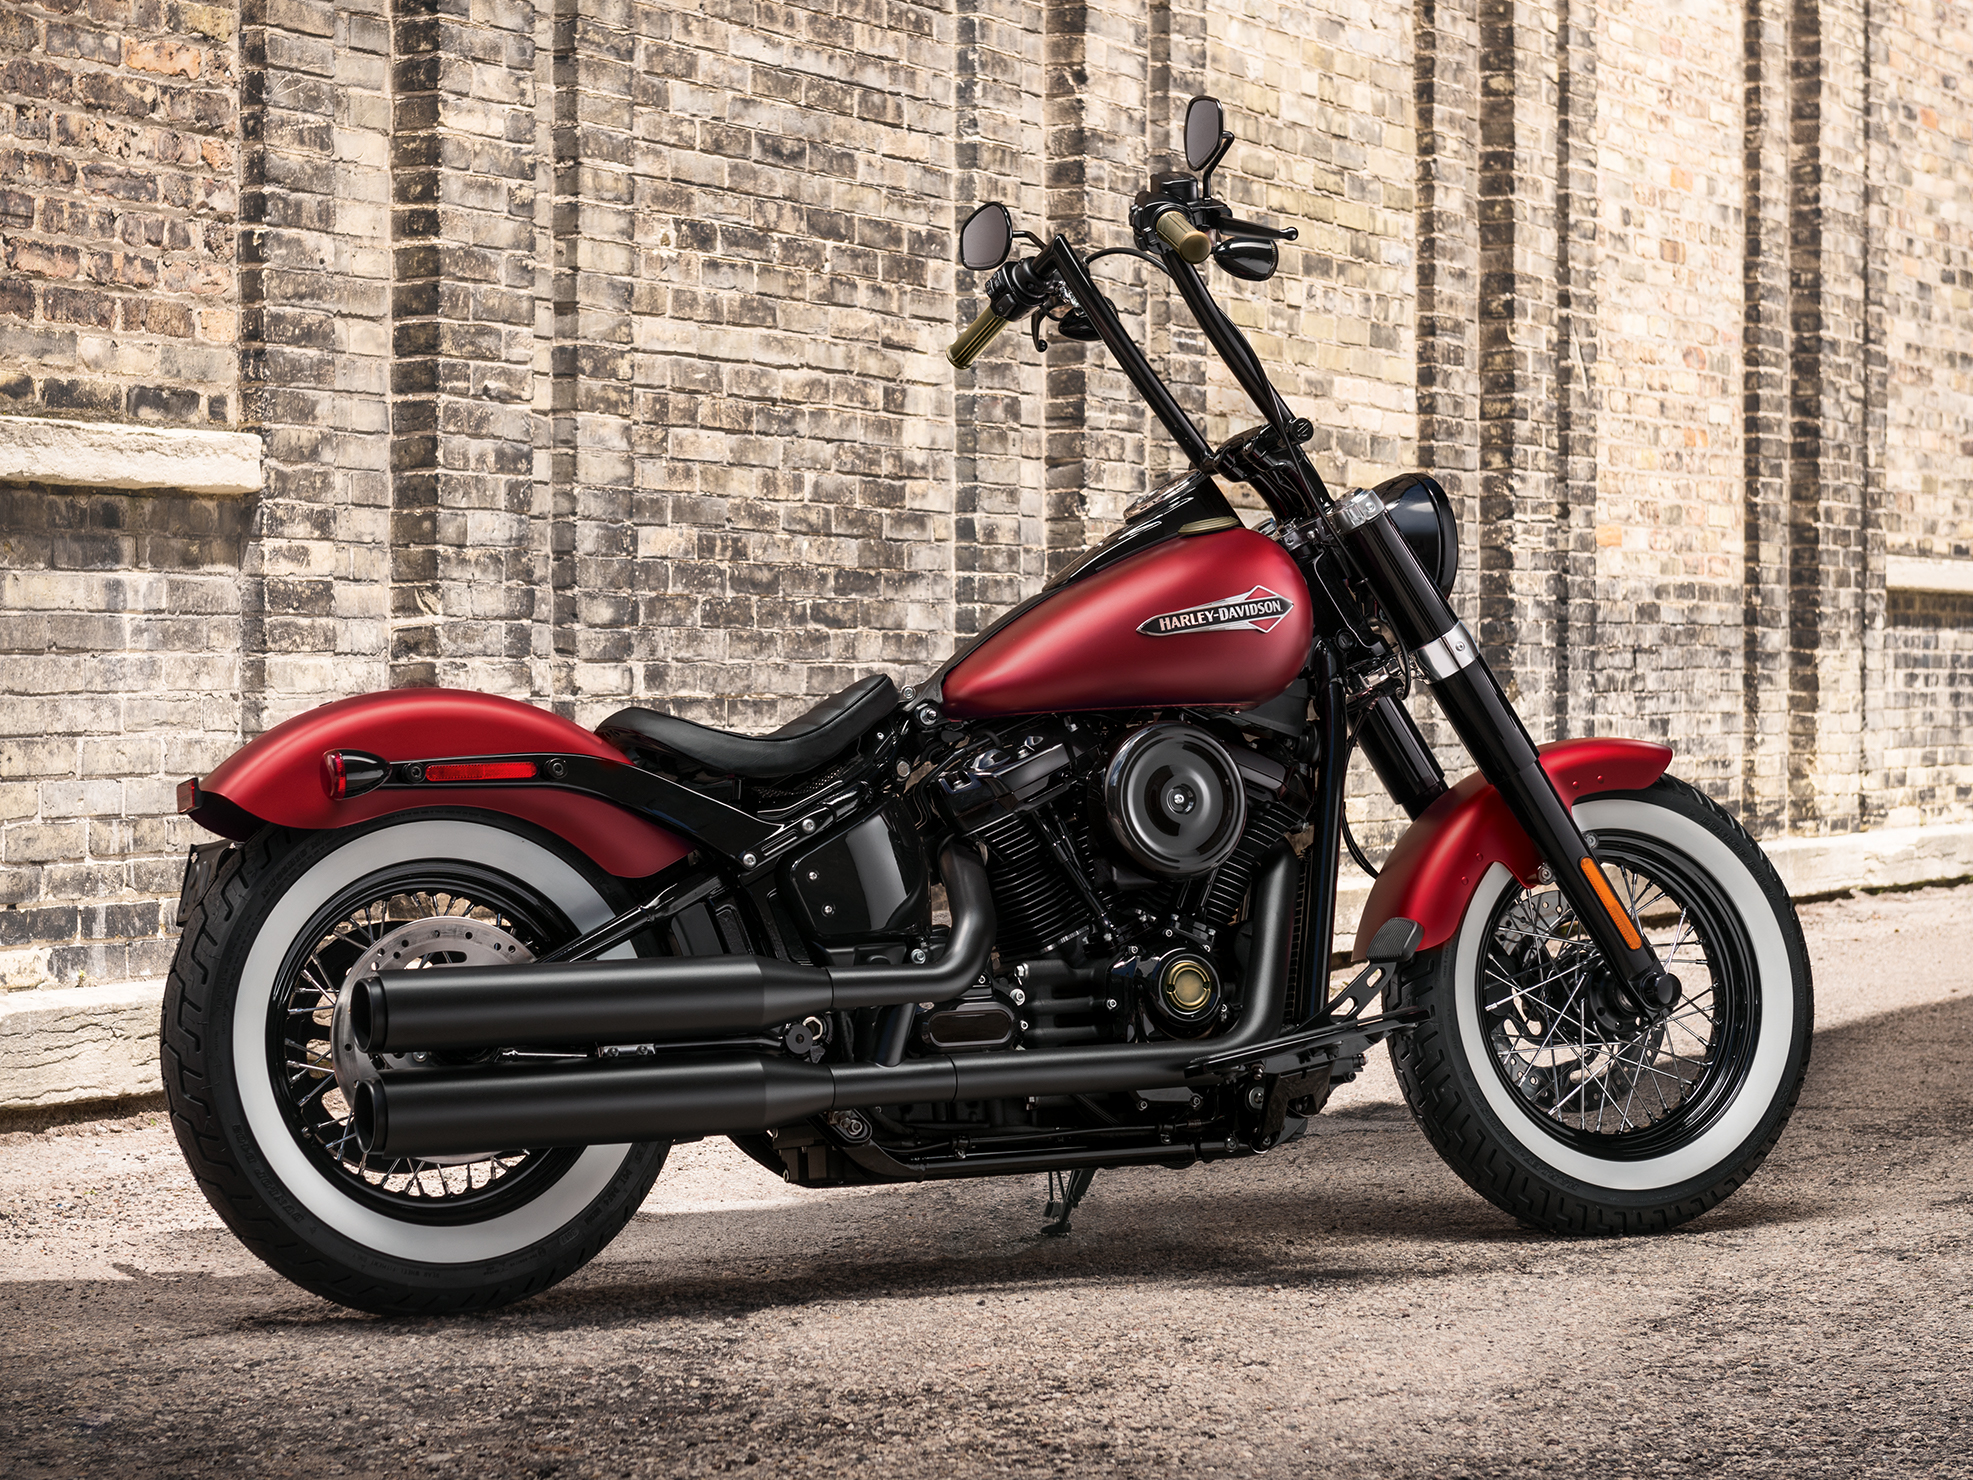  2019 Softail Motorcycles Harley Davidson Canada